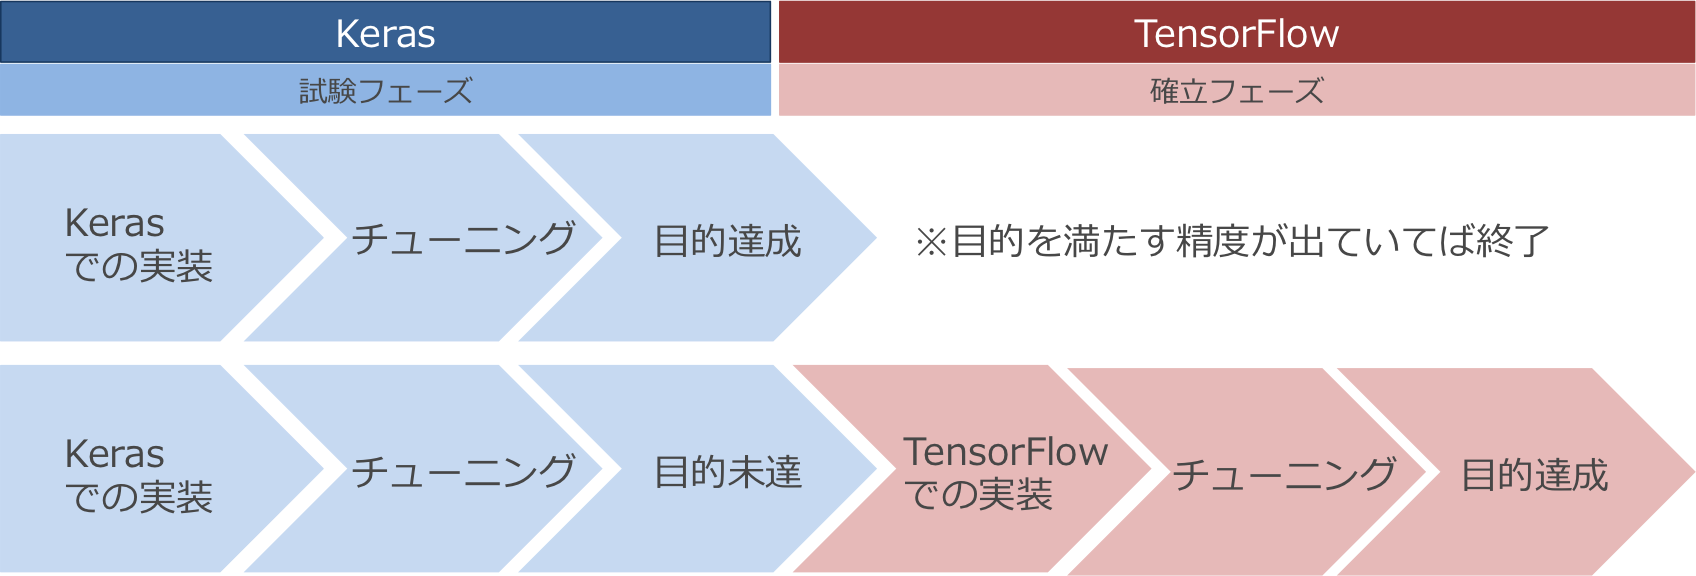 Tensorflowで可視化したグラフ